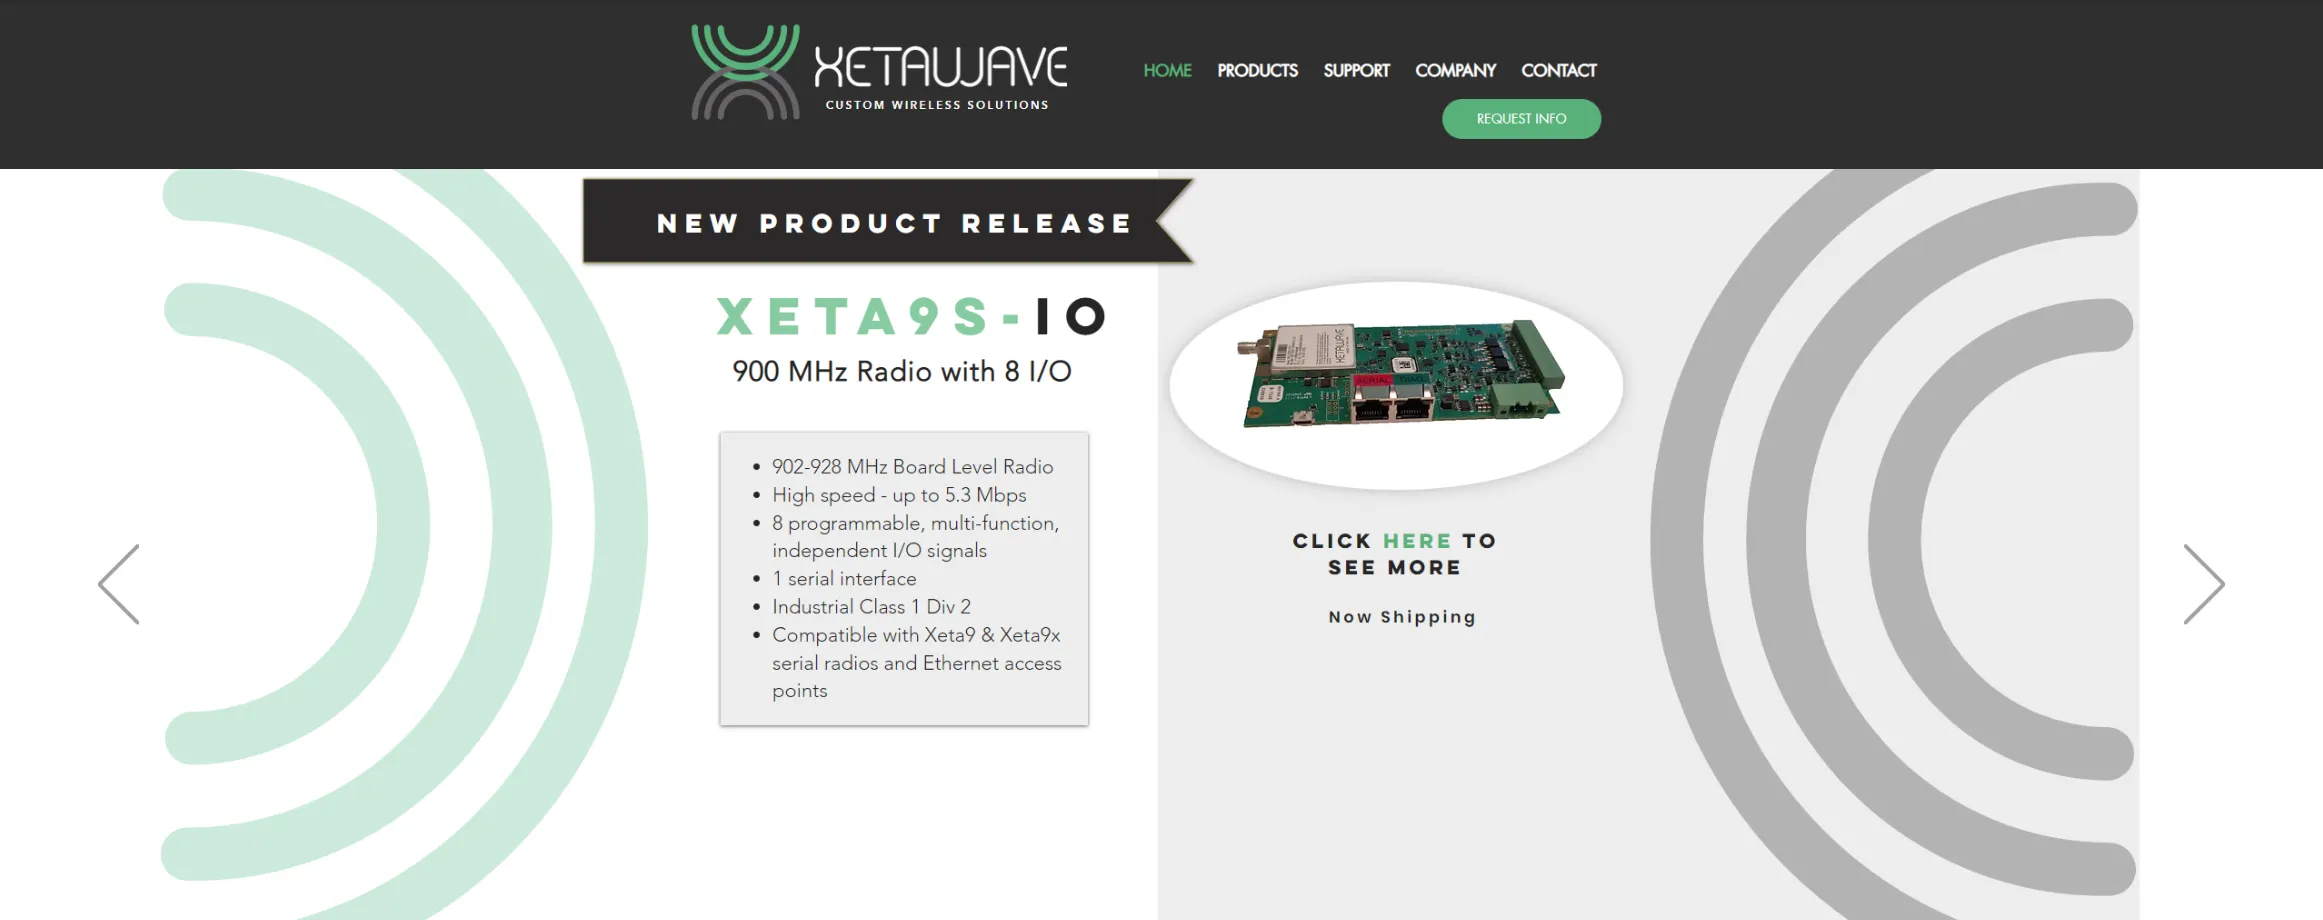 Xetawave website preview